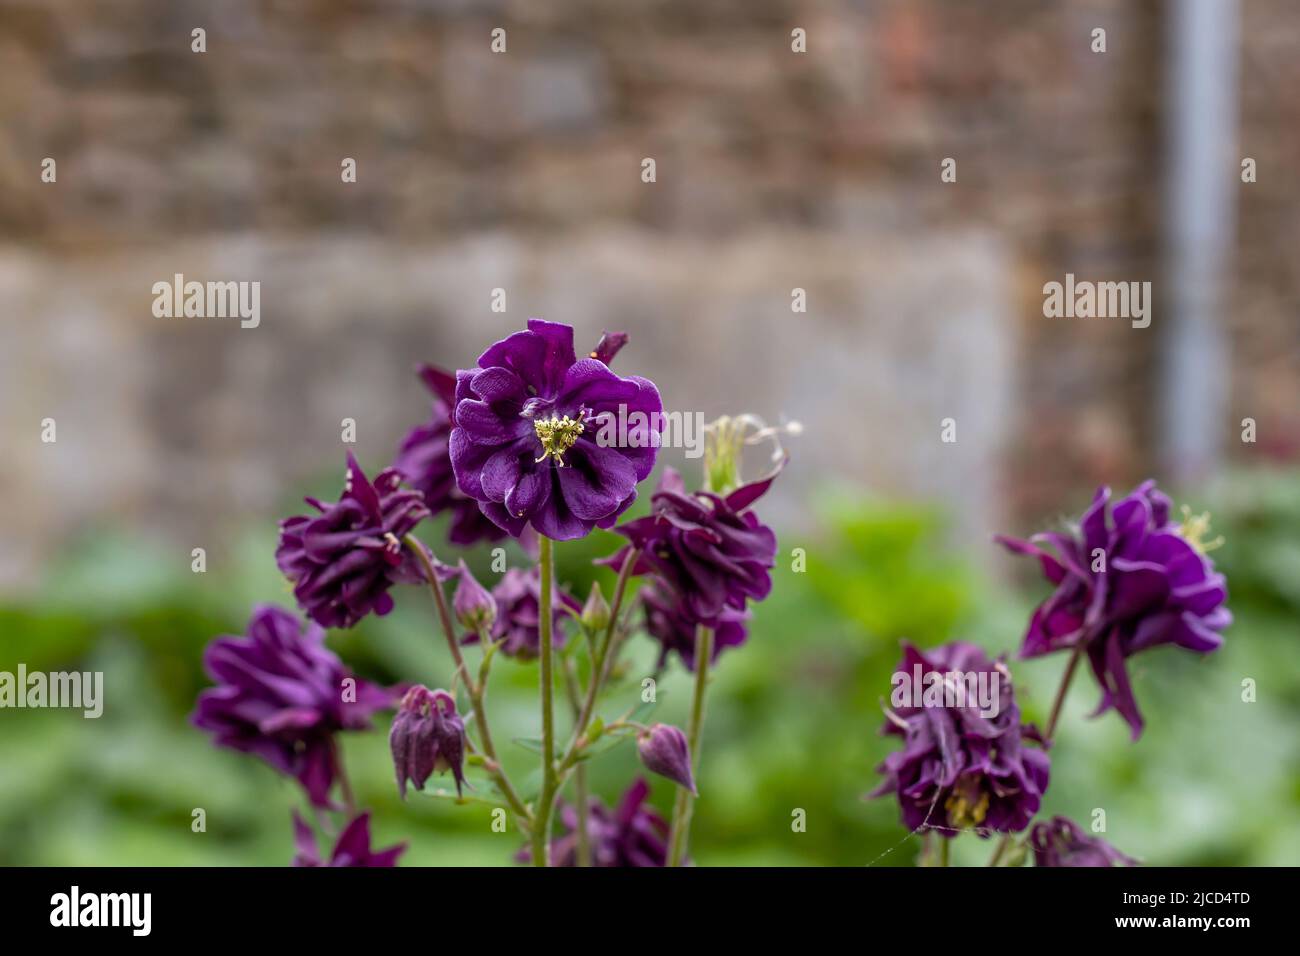 Granny's bonnet (Aquilegia) purple flowers Stock Photo